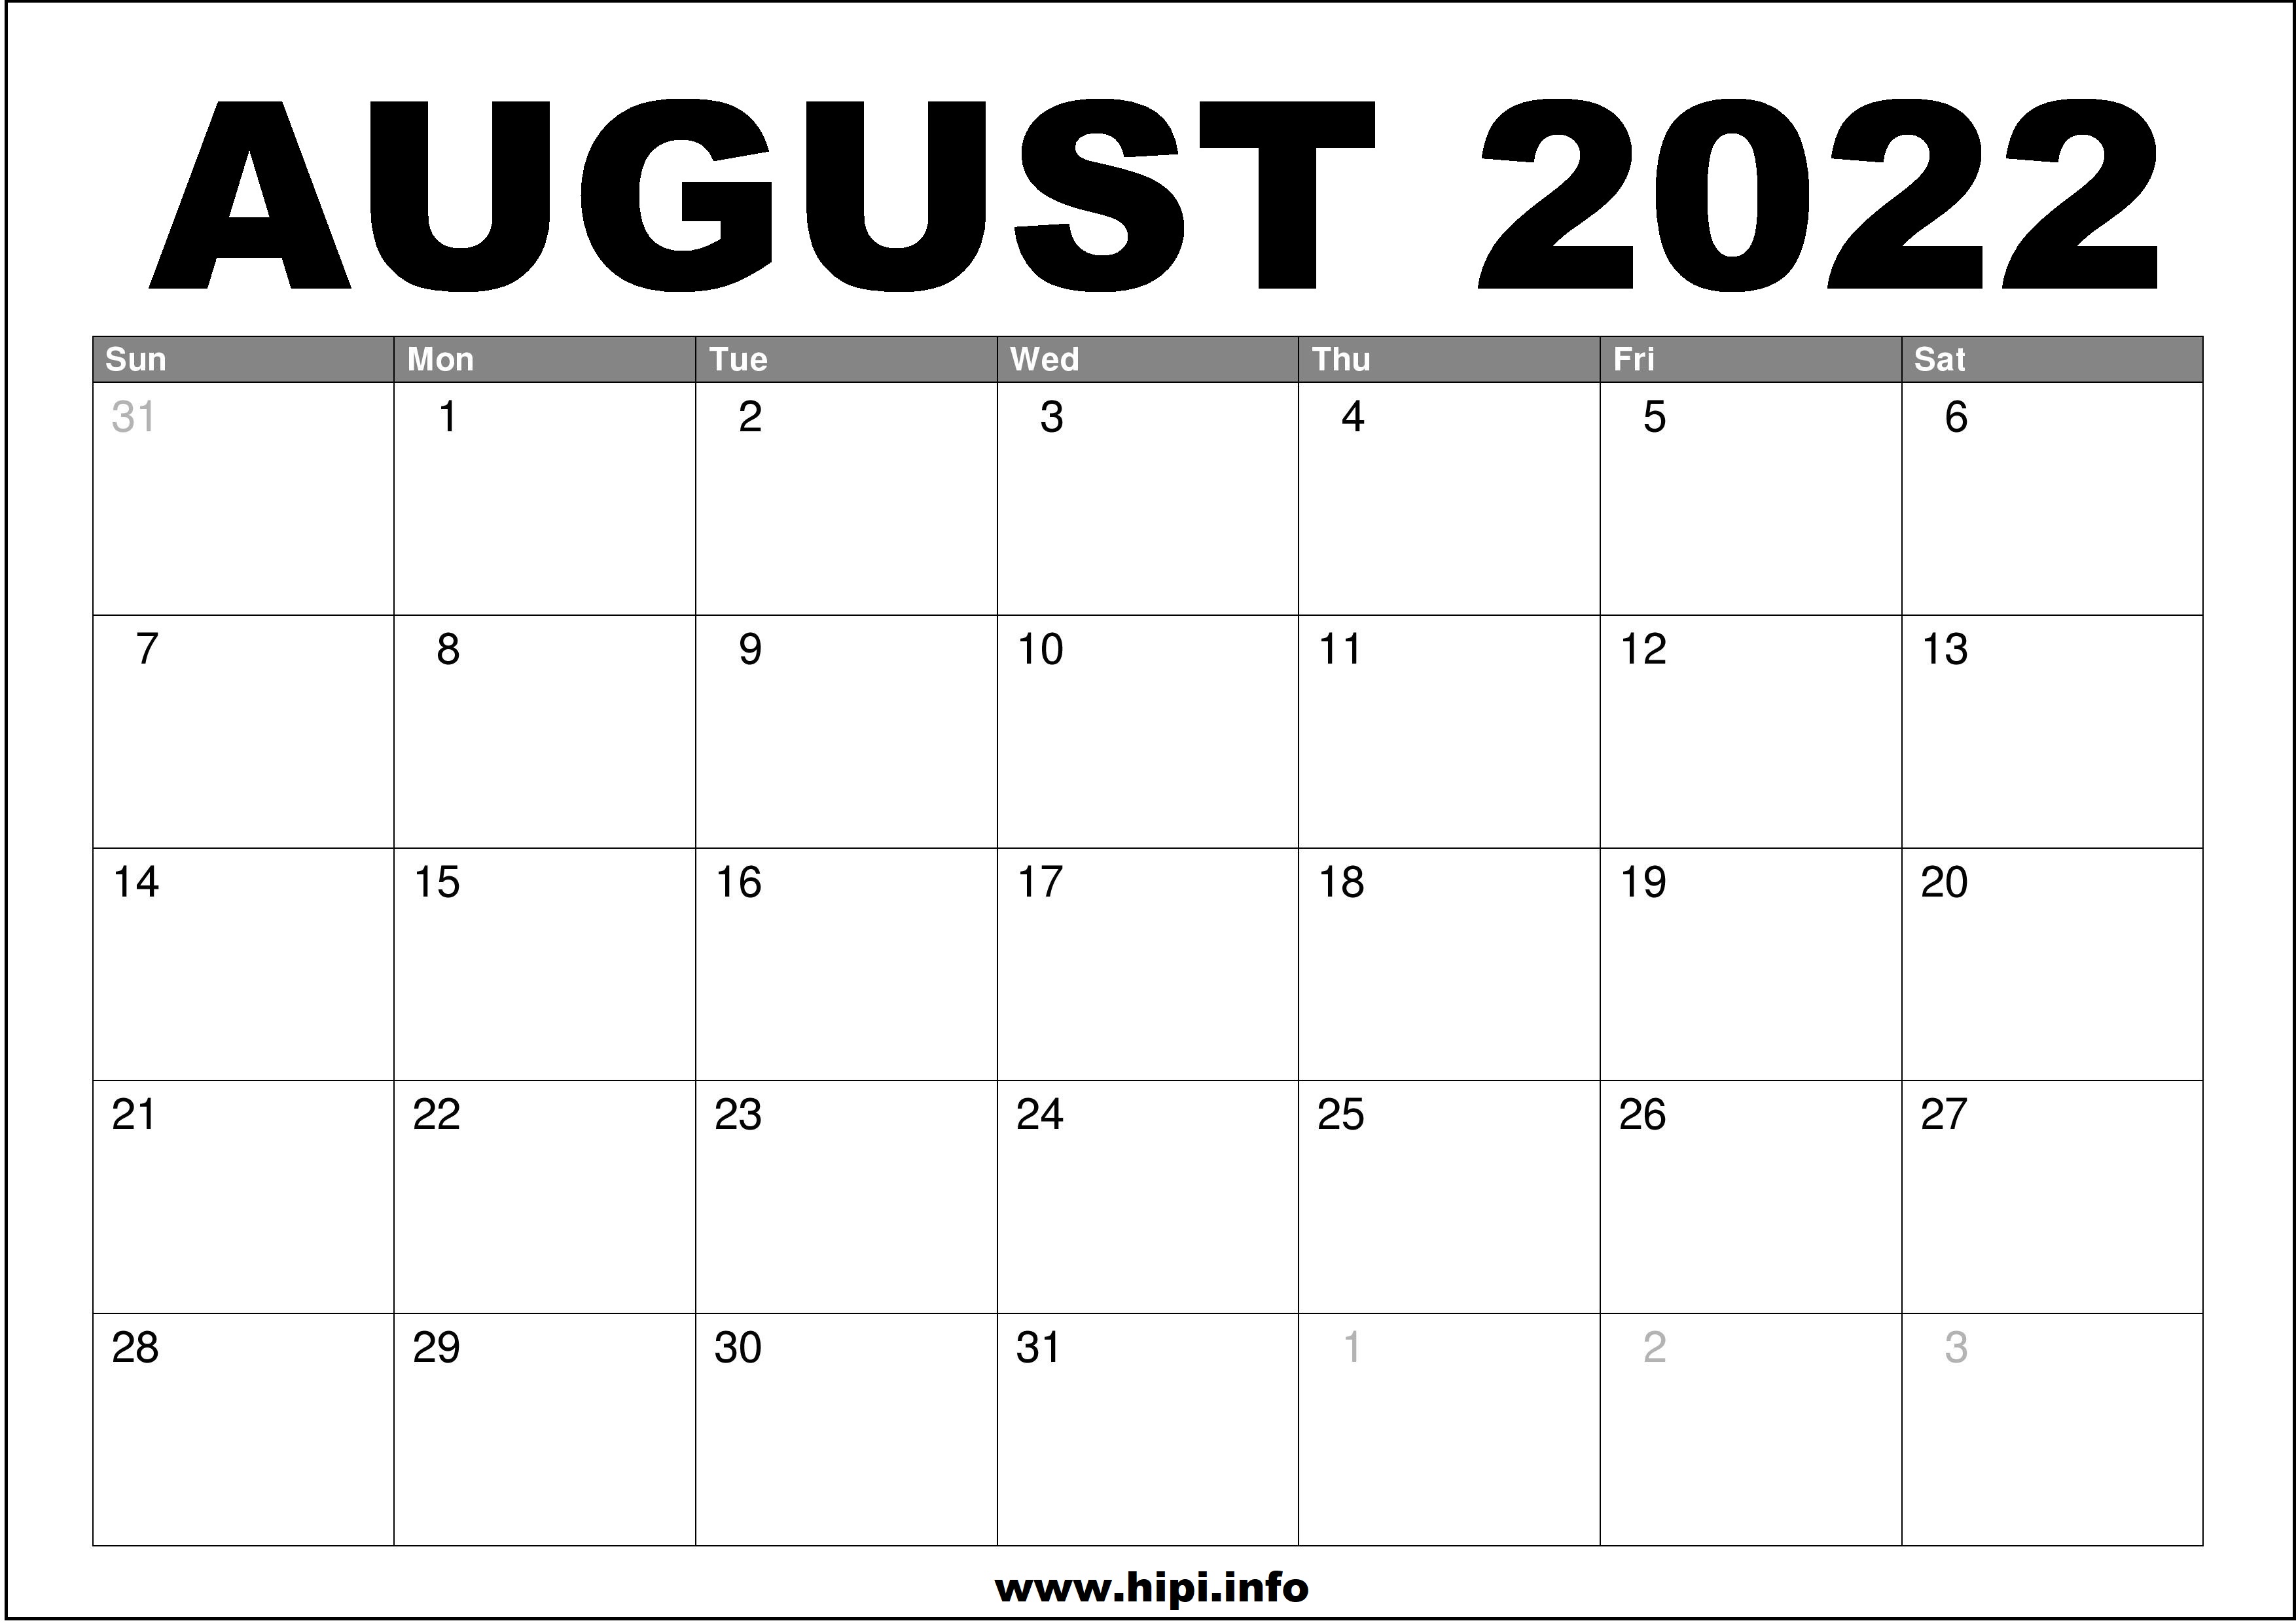 Printable August 2022 Calendar Free August 2022 Calendar Printable Free - Hipi.info | Calendars Printable Free